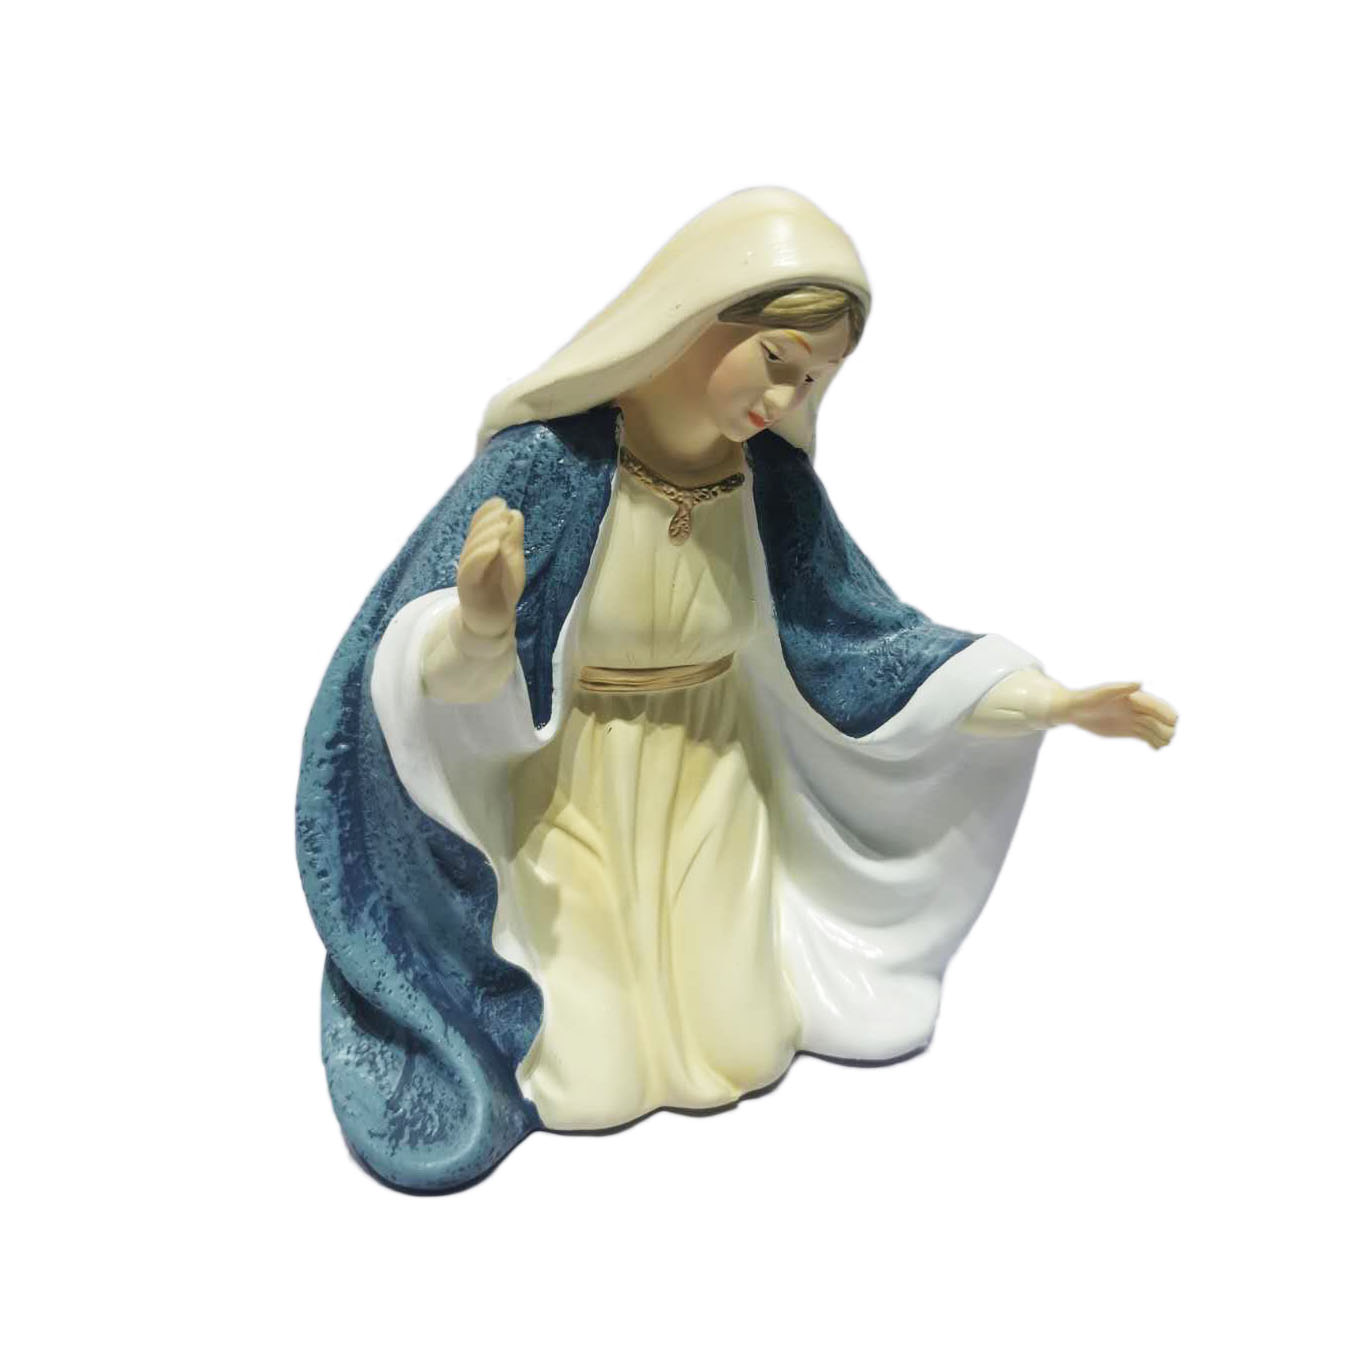 Religious Handmade Holy Family Christmas 11Piece Set of nativity Scene Figurines Decorative Statue